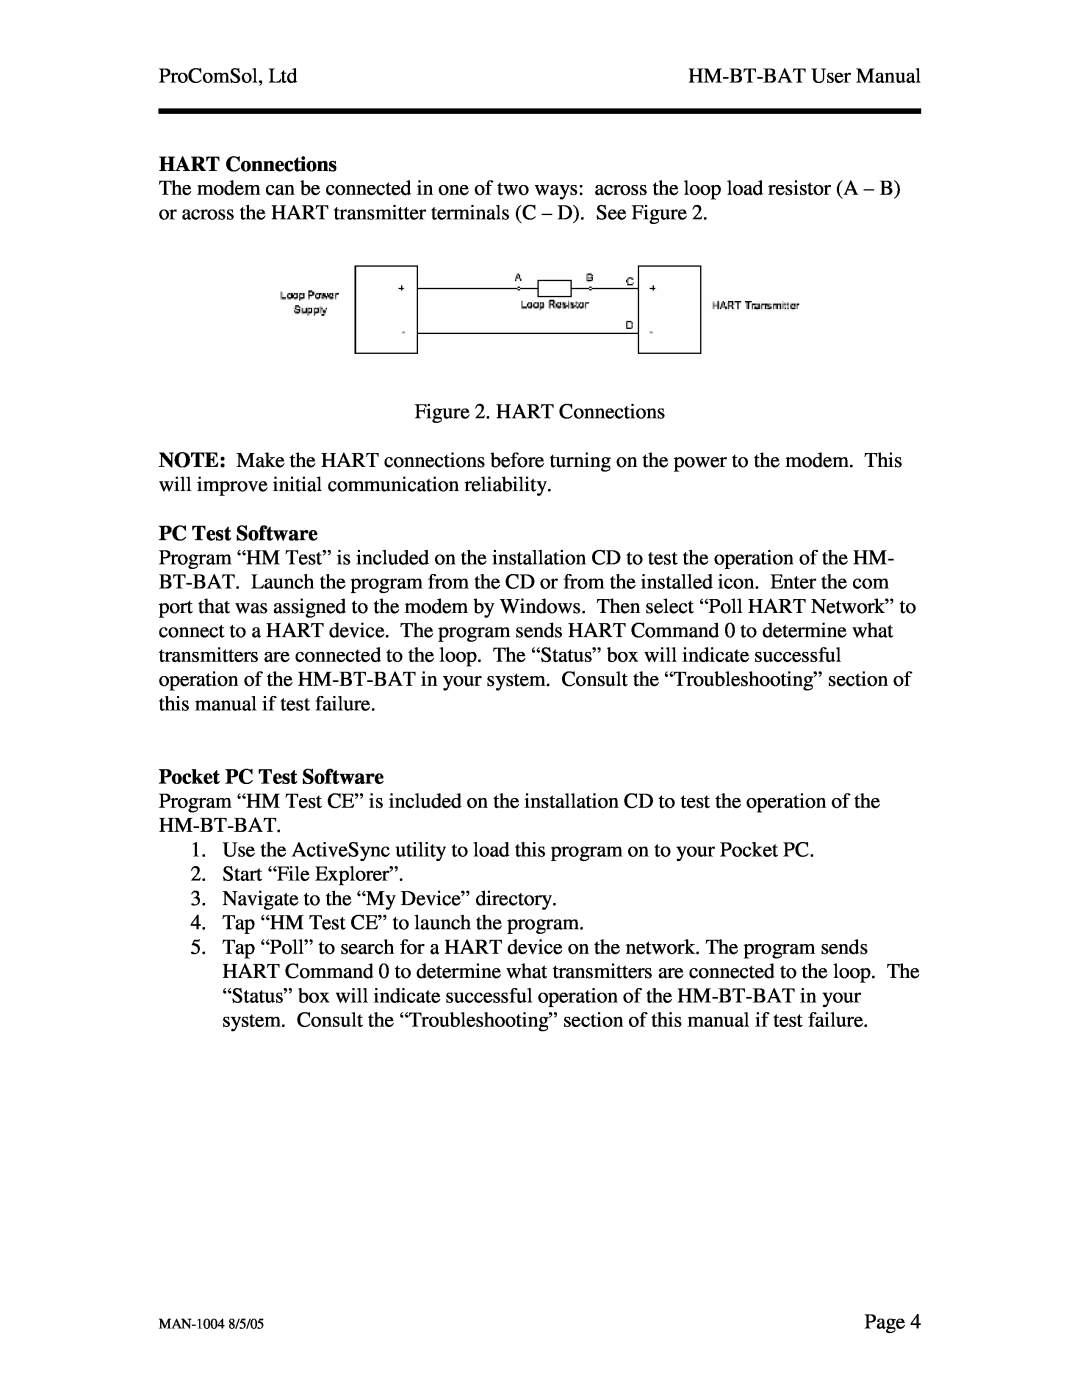 Procom HM-BT-BAT user manual HART Connections, Pocket PC Test Software 